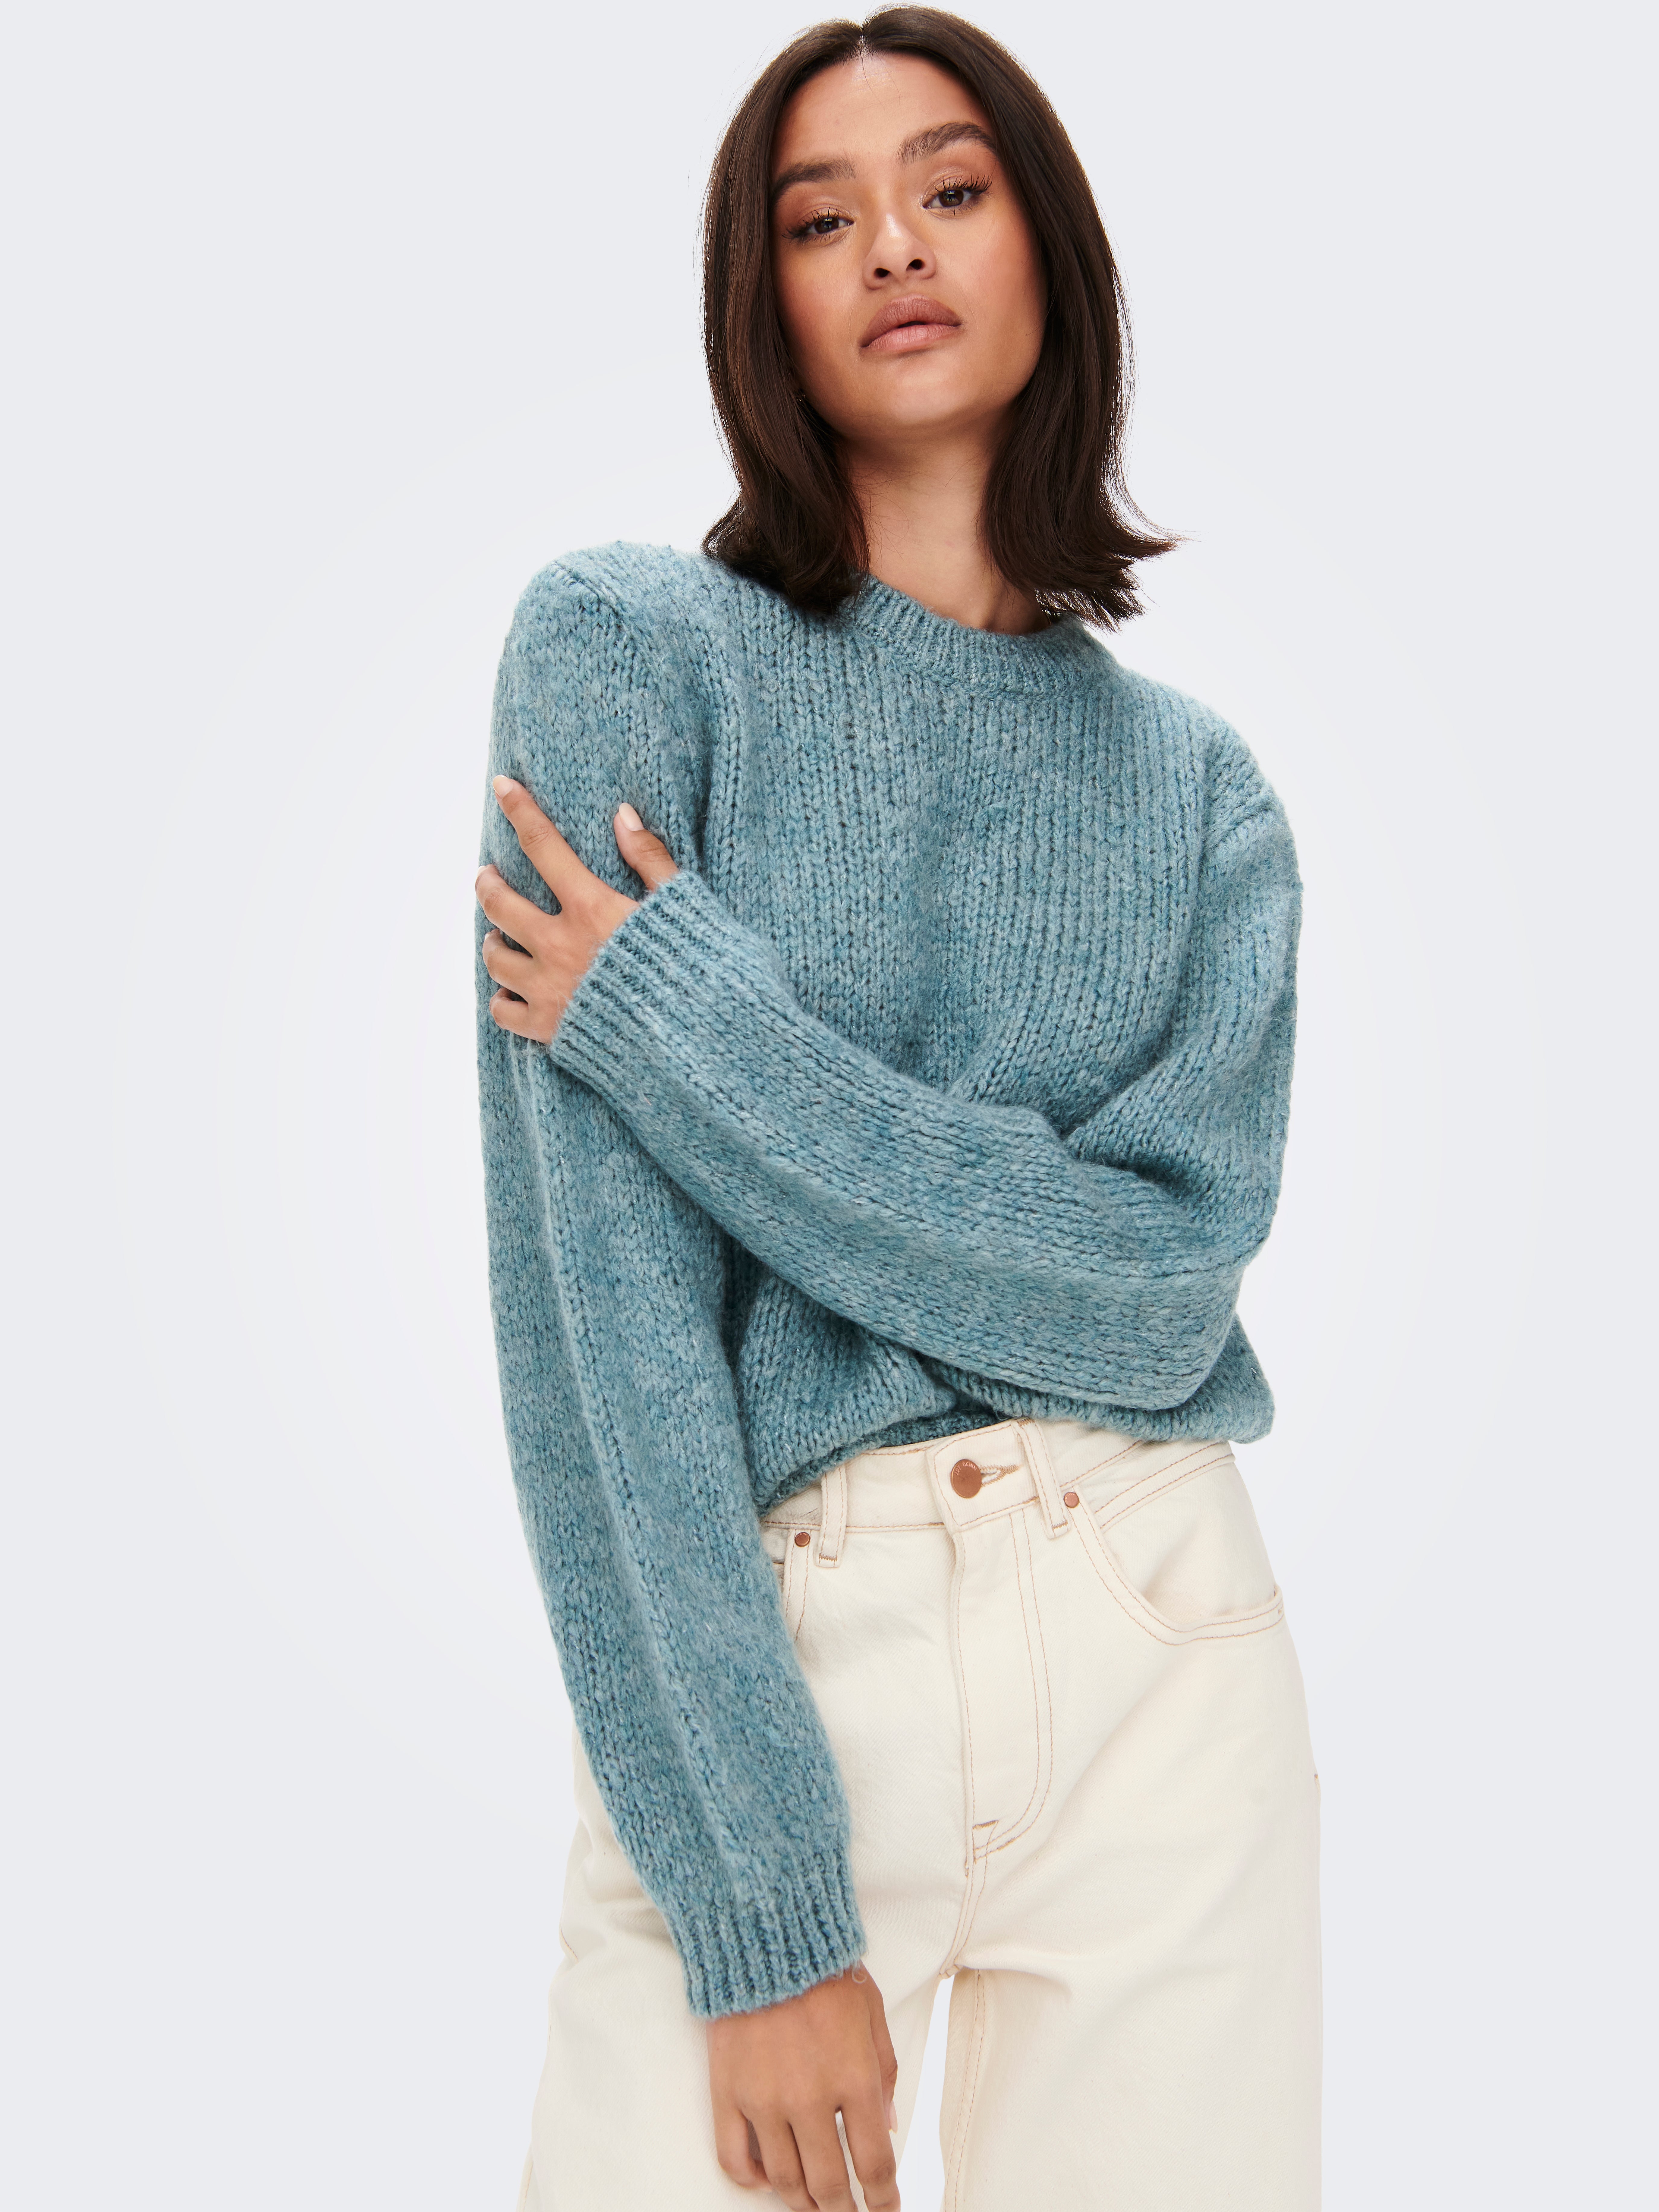 ella_selectshop knit balloon pullover - トップス